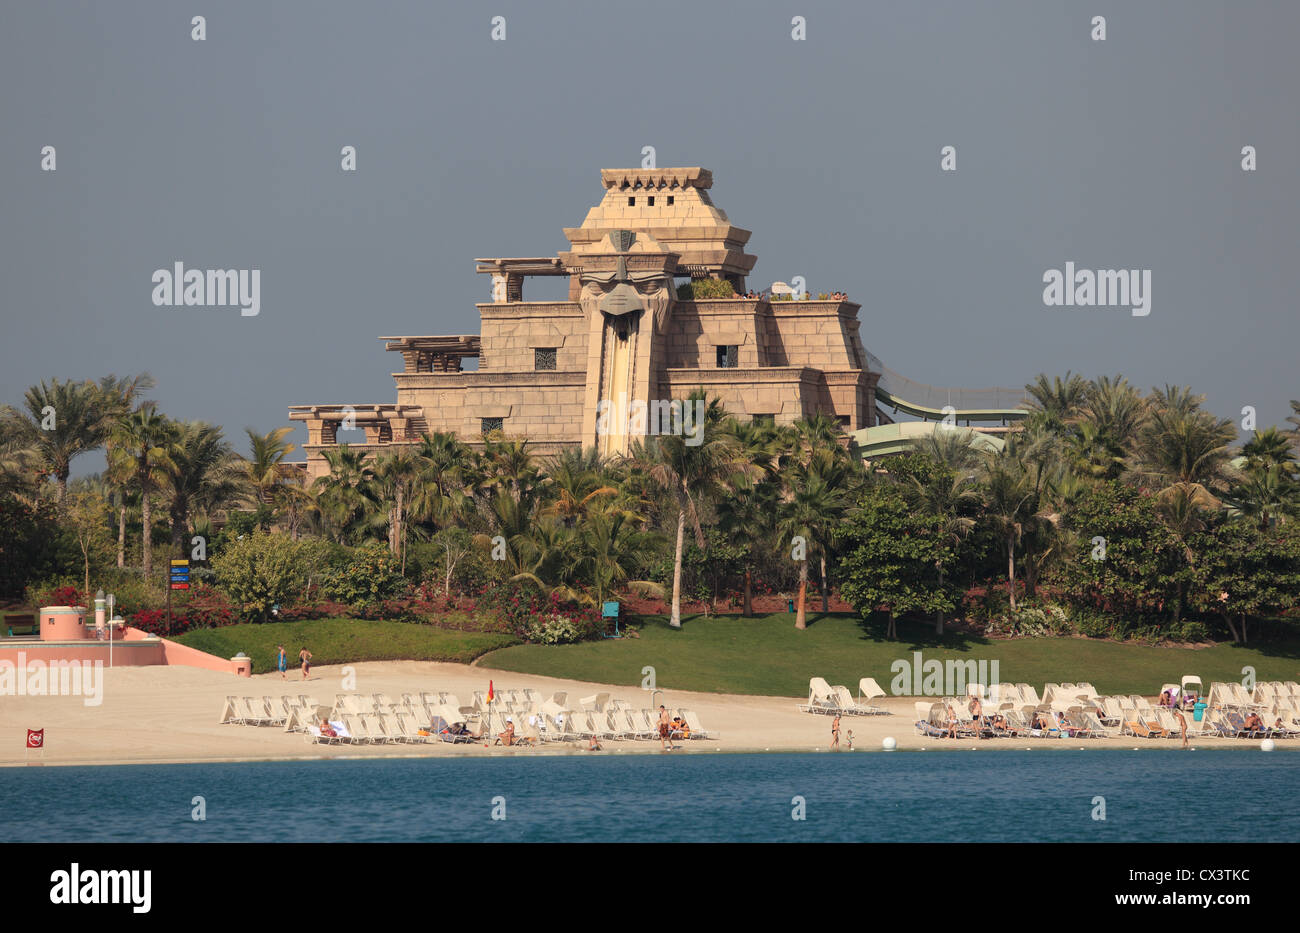 Aquaventure theme water park at Atlantis The Palm in Dubai, United Arab Emirates Stock Photo